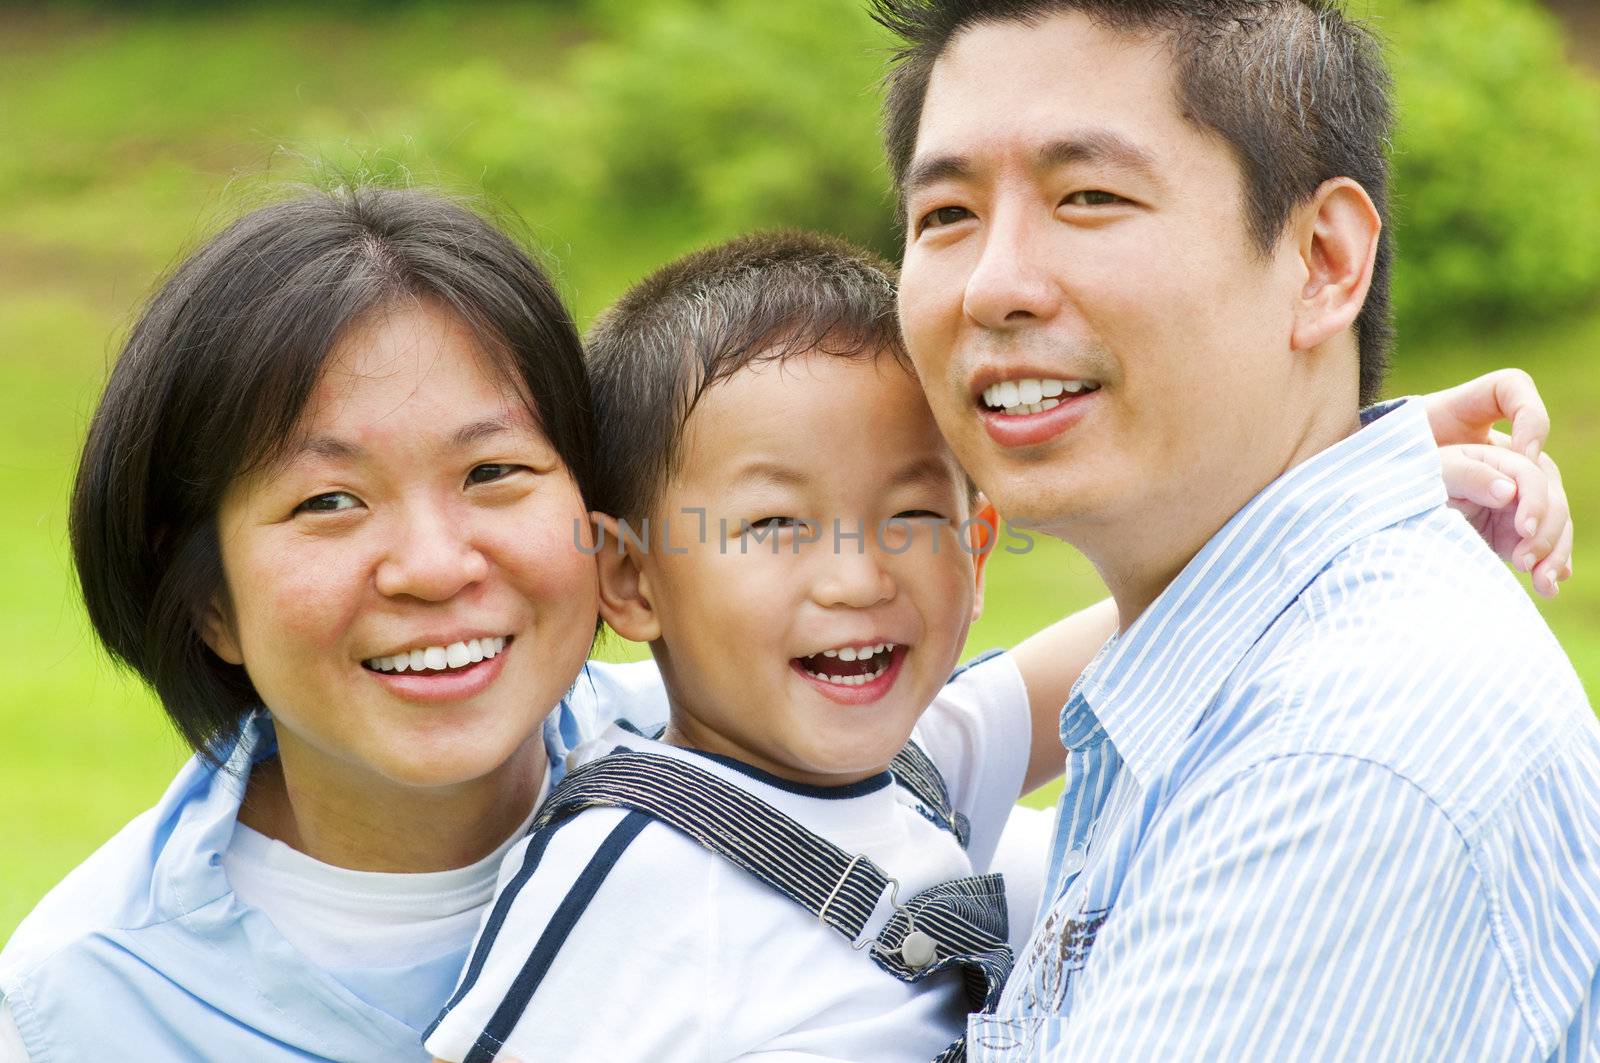 Happy Asian family at outdoors